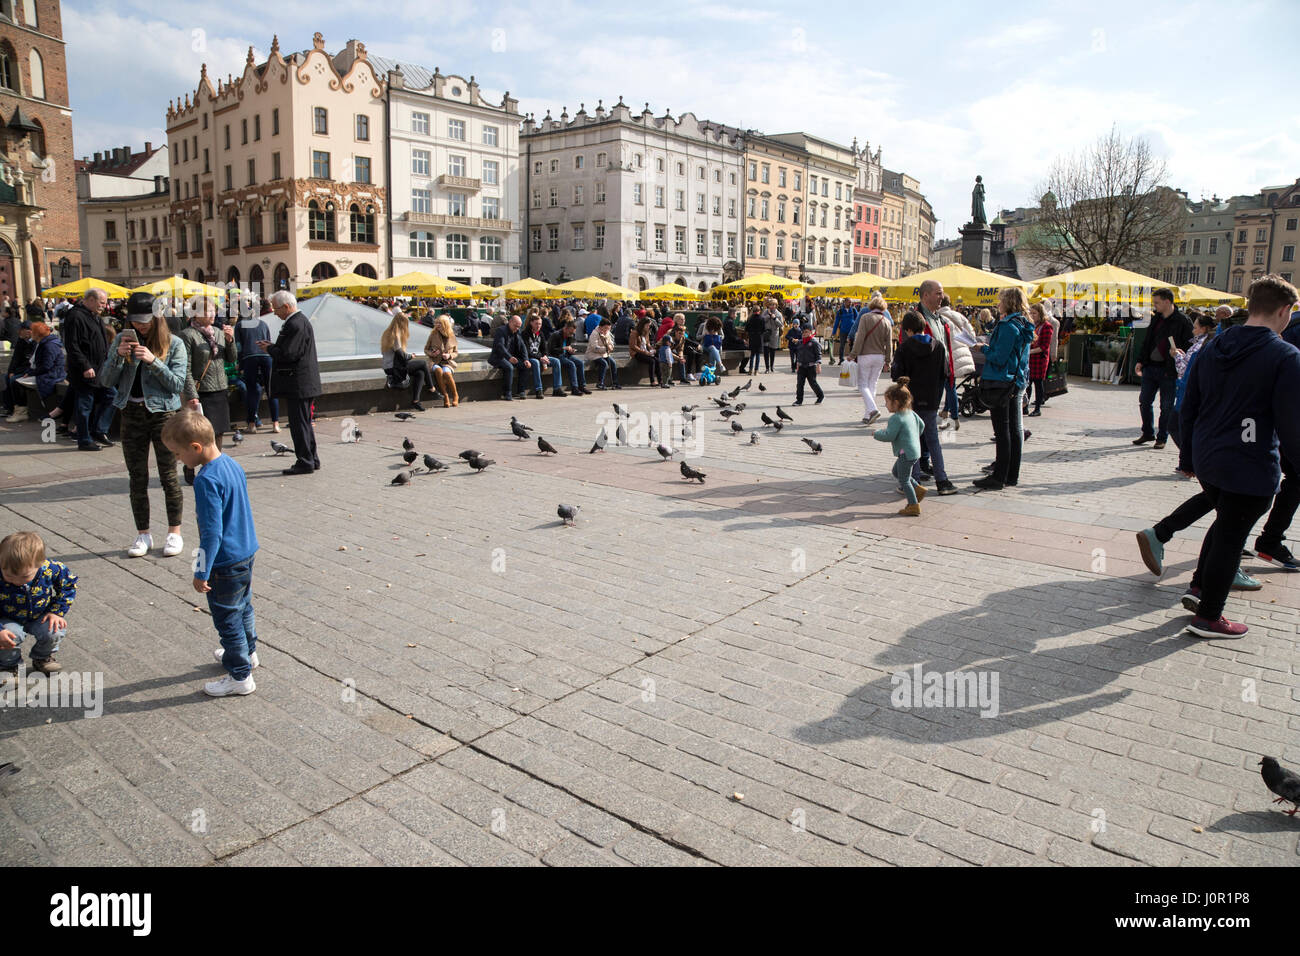 Busy market square in Krakow, Poland Stock Photo